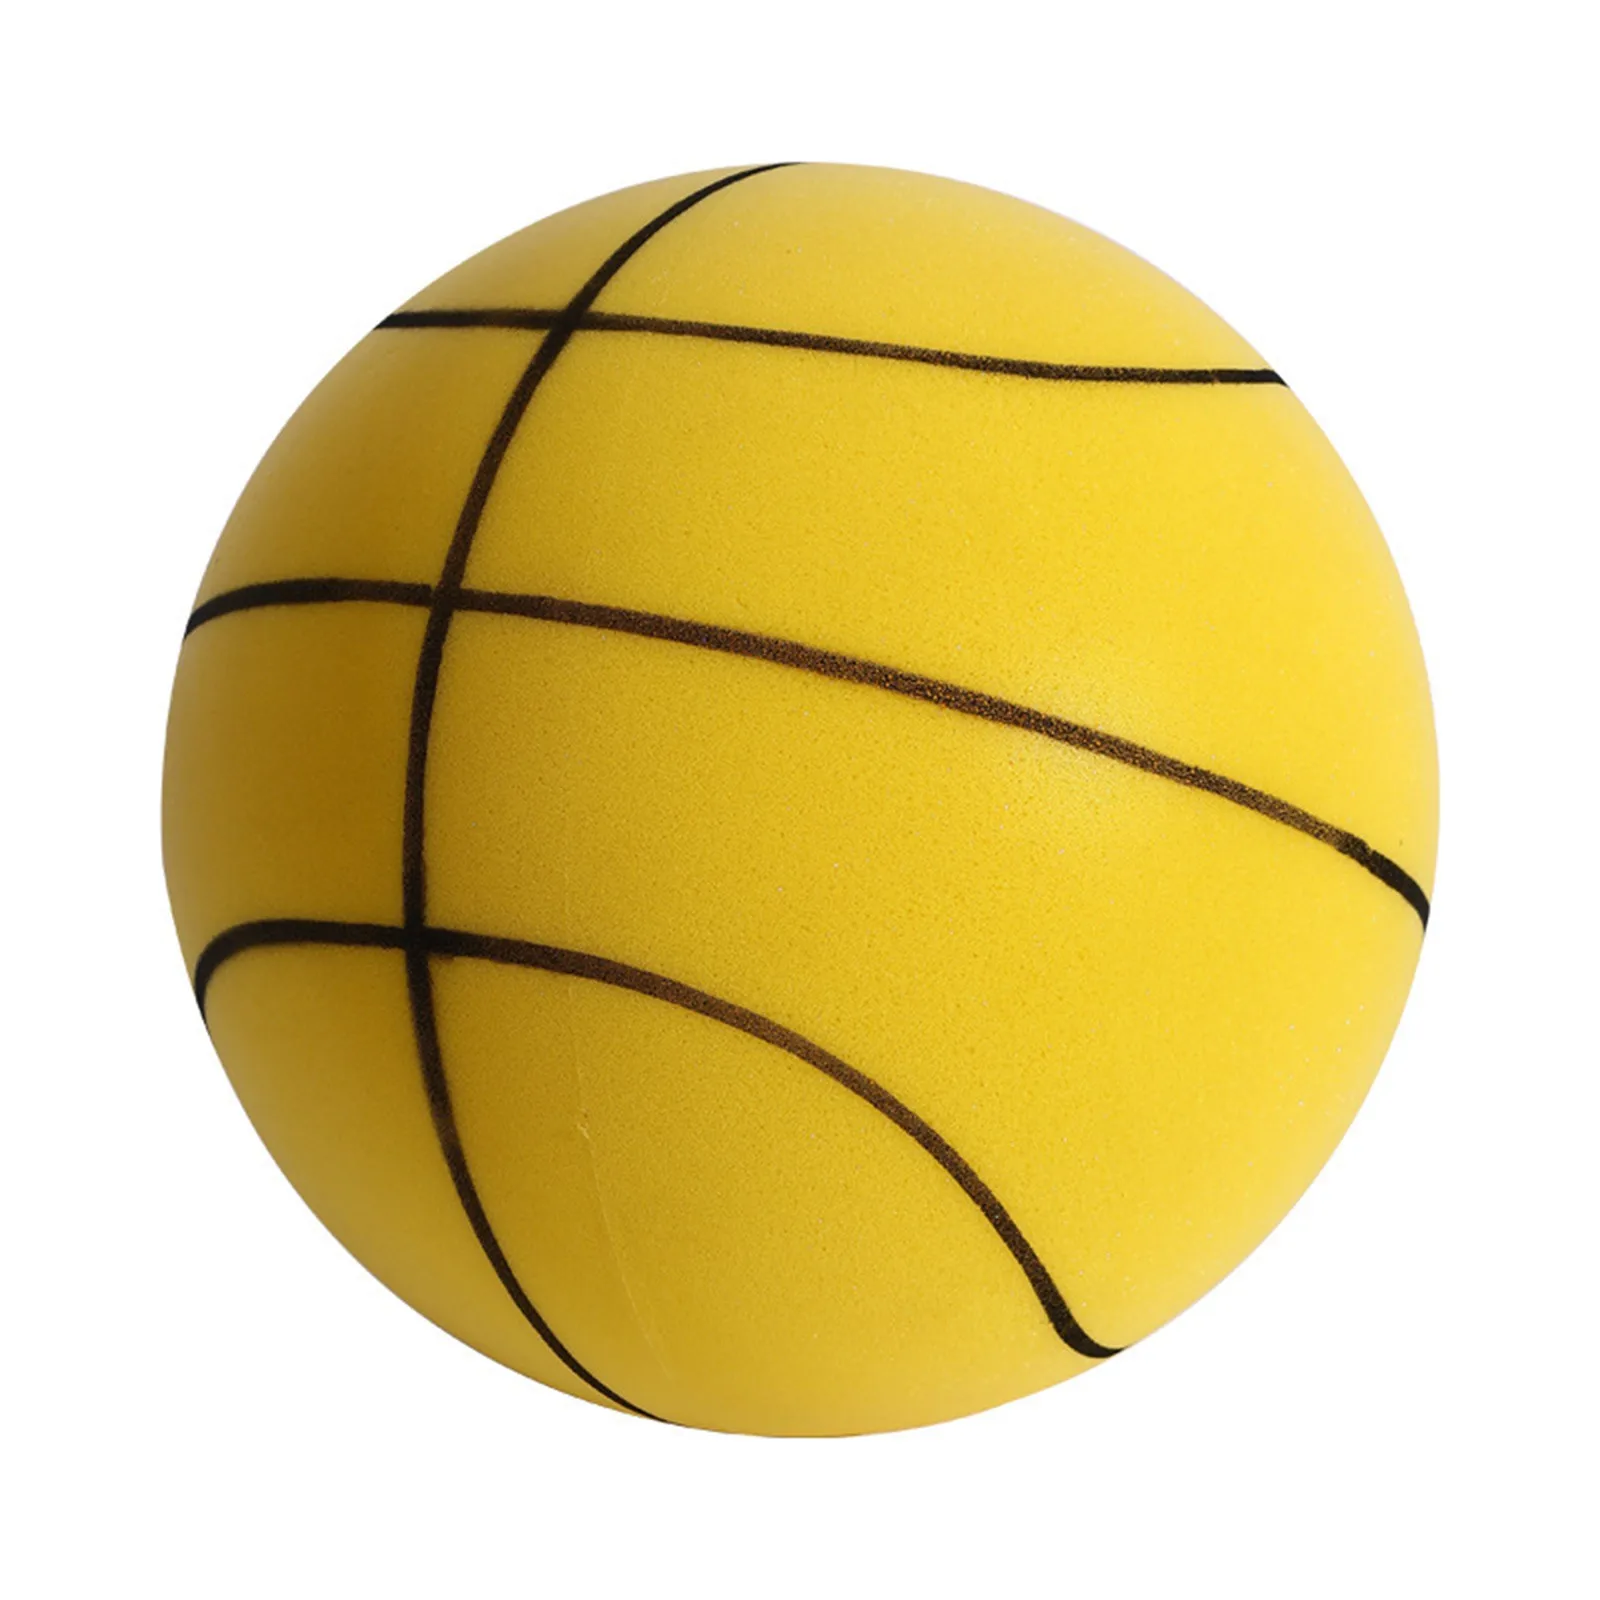 Bola de treino infantil silenciosa Pat, basquetebol indoor, bola especial para bebé, 24cm